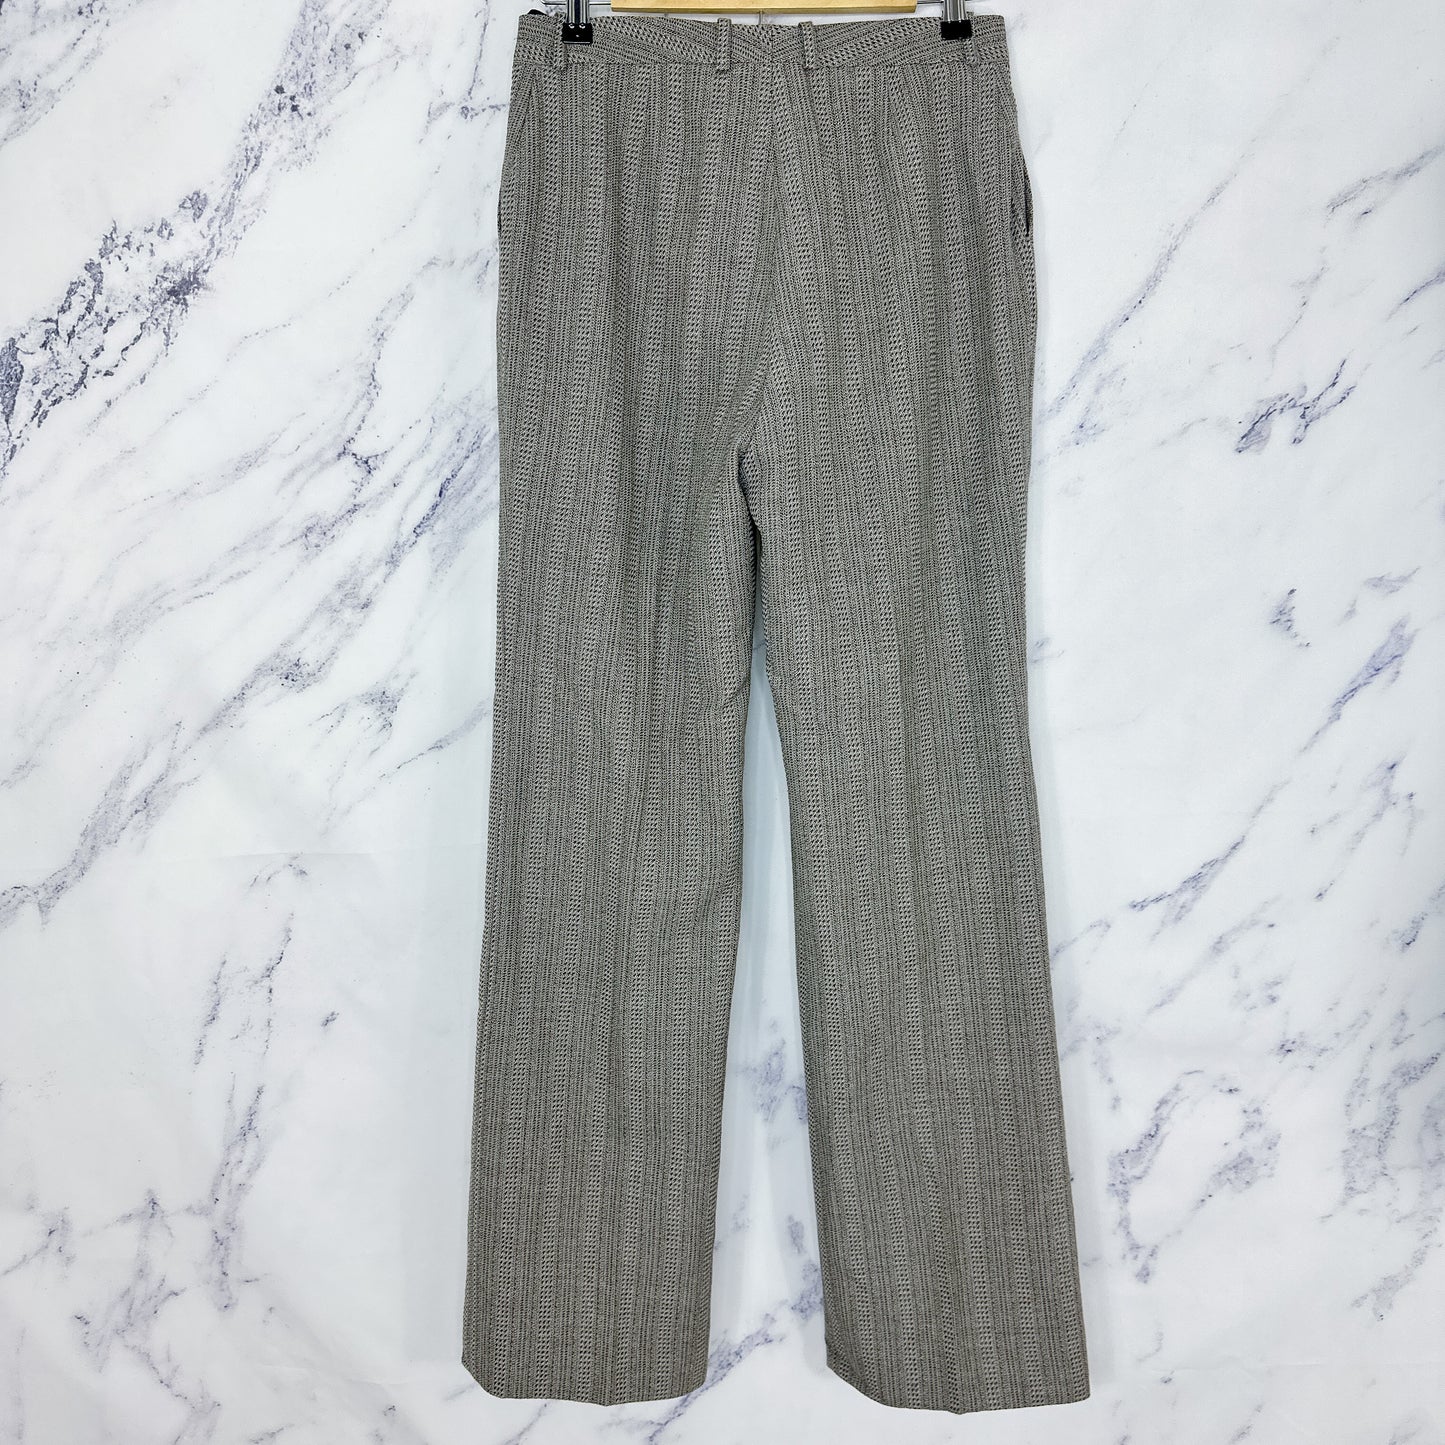 Celine | Grey Wool Pants | Sz EU 40 / US 4